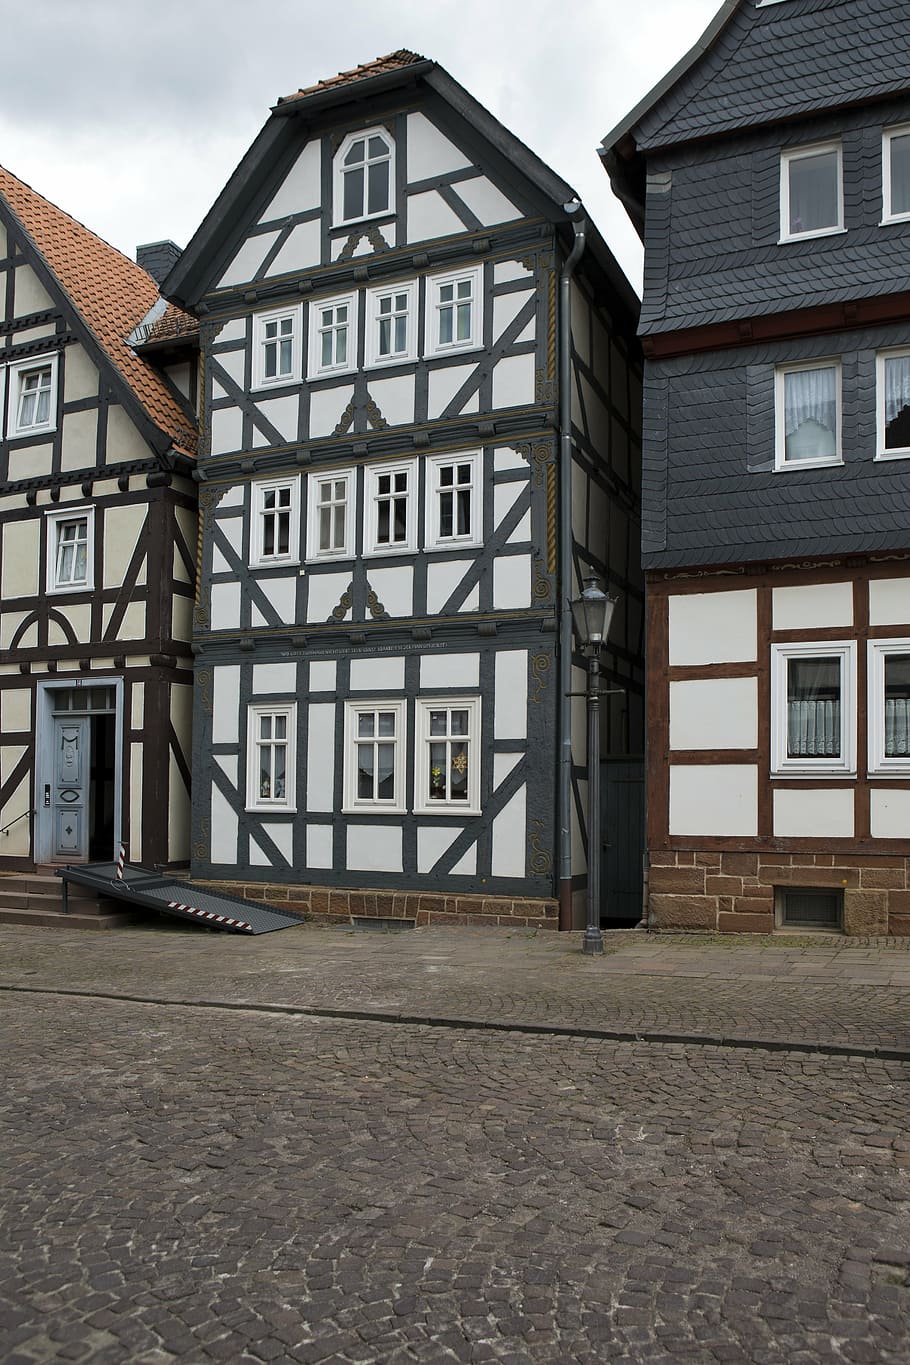 frankenberg, hessen, germany, architecture, timber framed houses